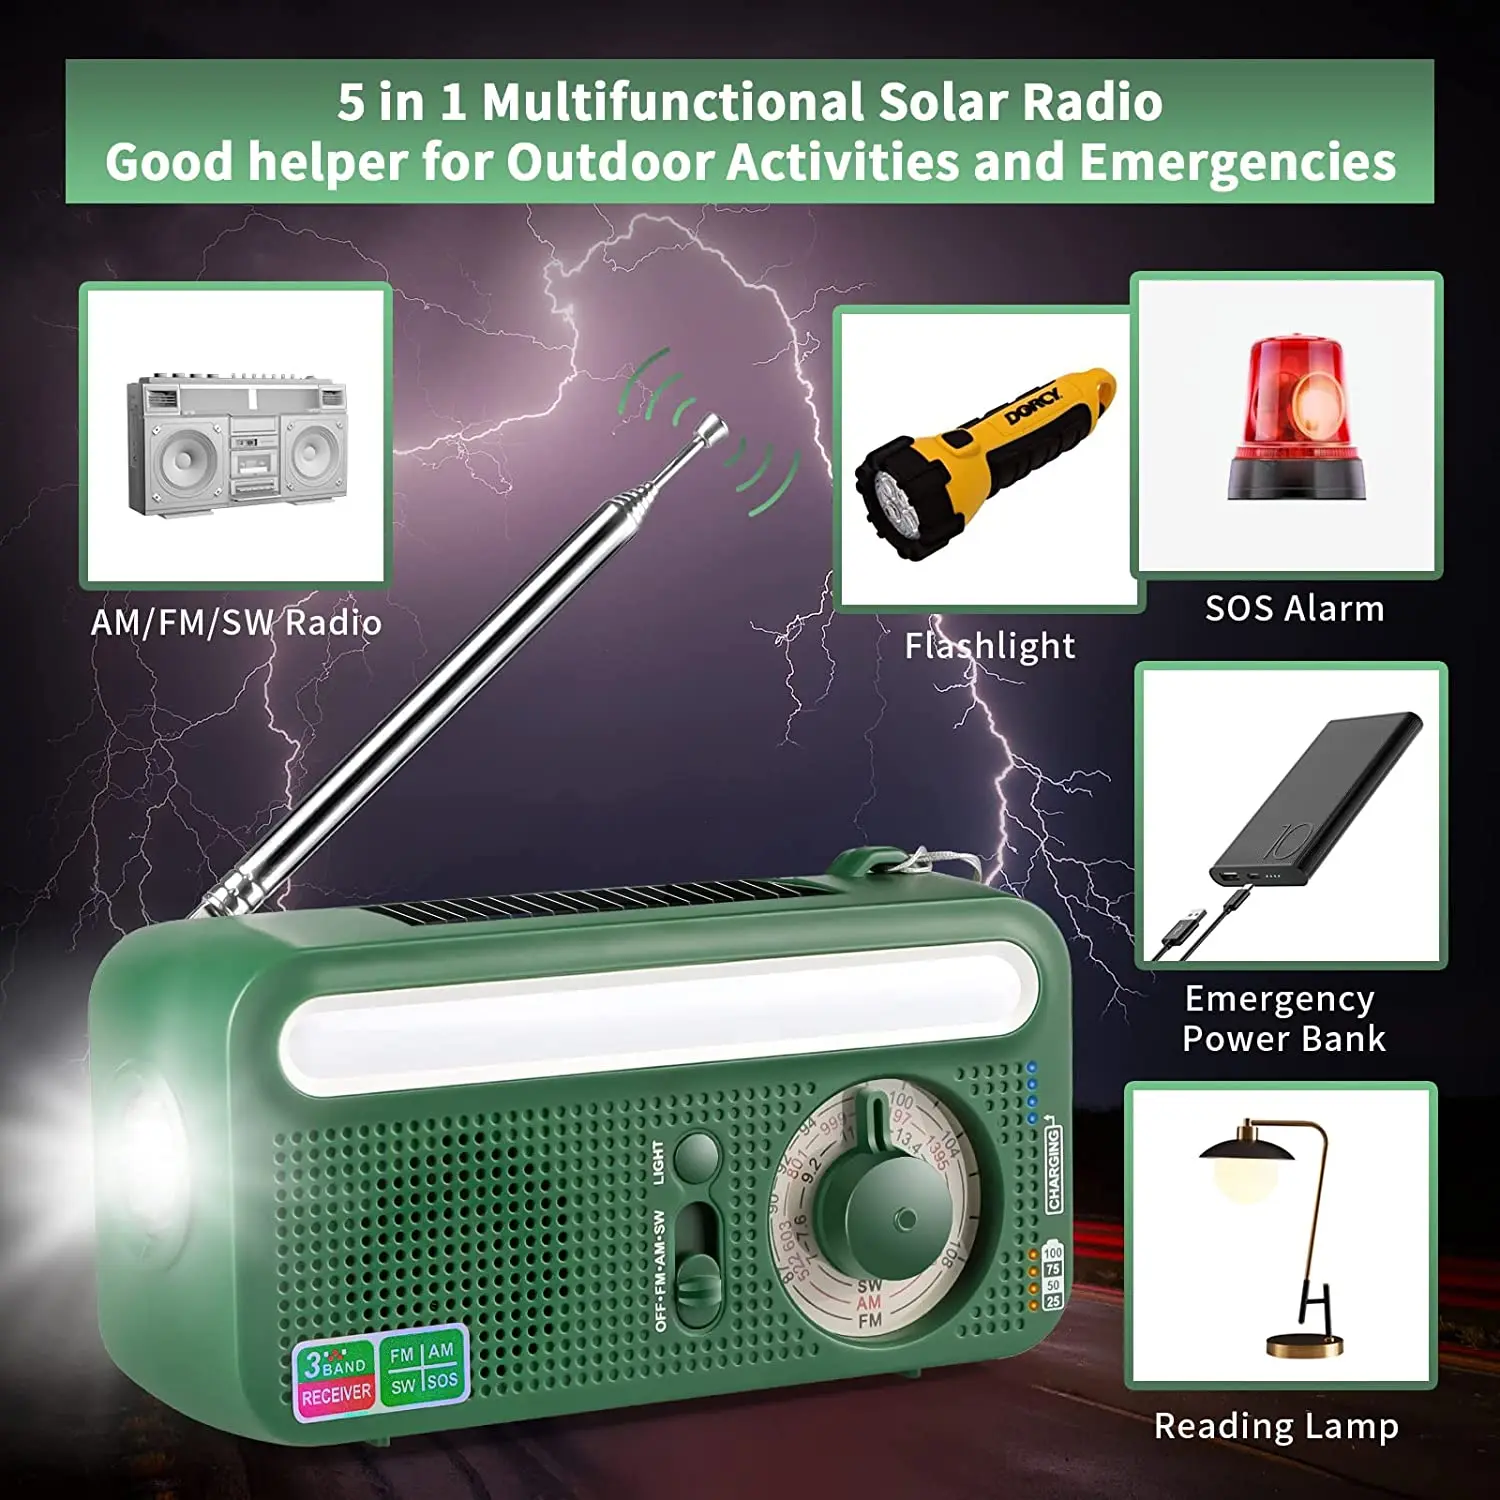 

Solar Power Emergency Rechargeable Hand Crank Radio AM/FM/SW Radio SOS Alarm With 2000mAh Power Bank Flashlight Reading Lamp